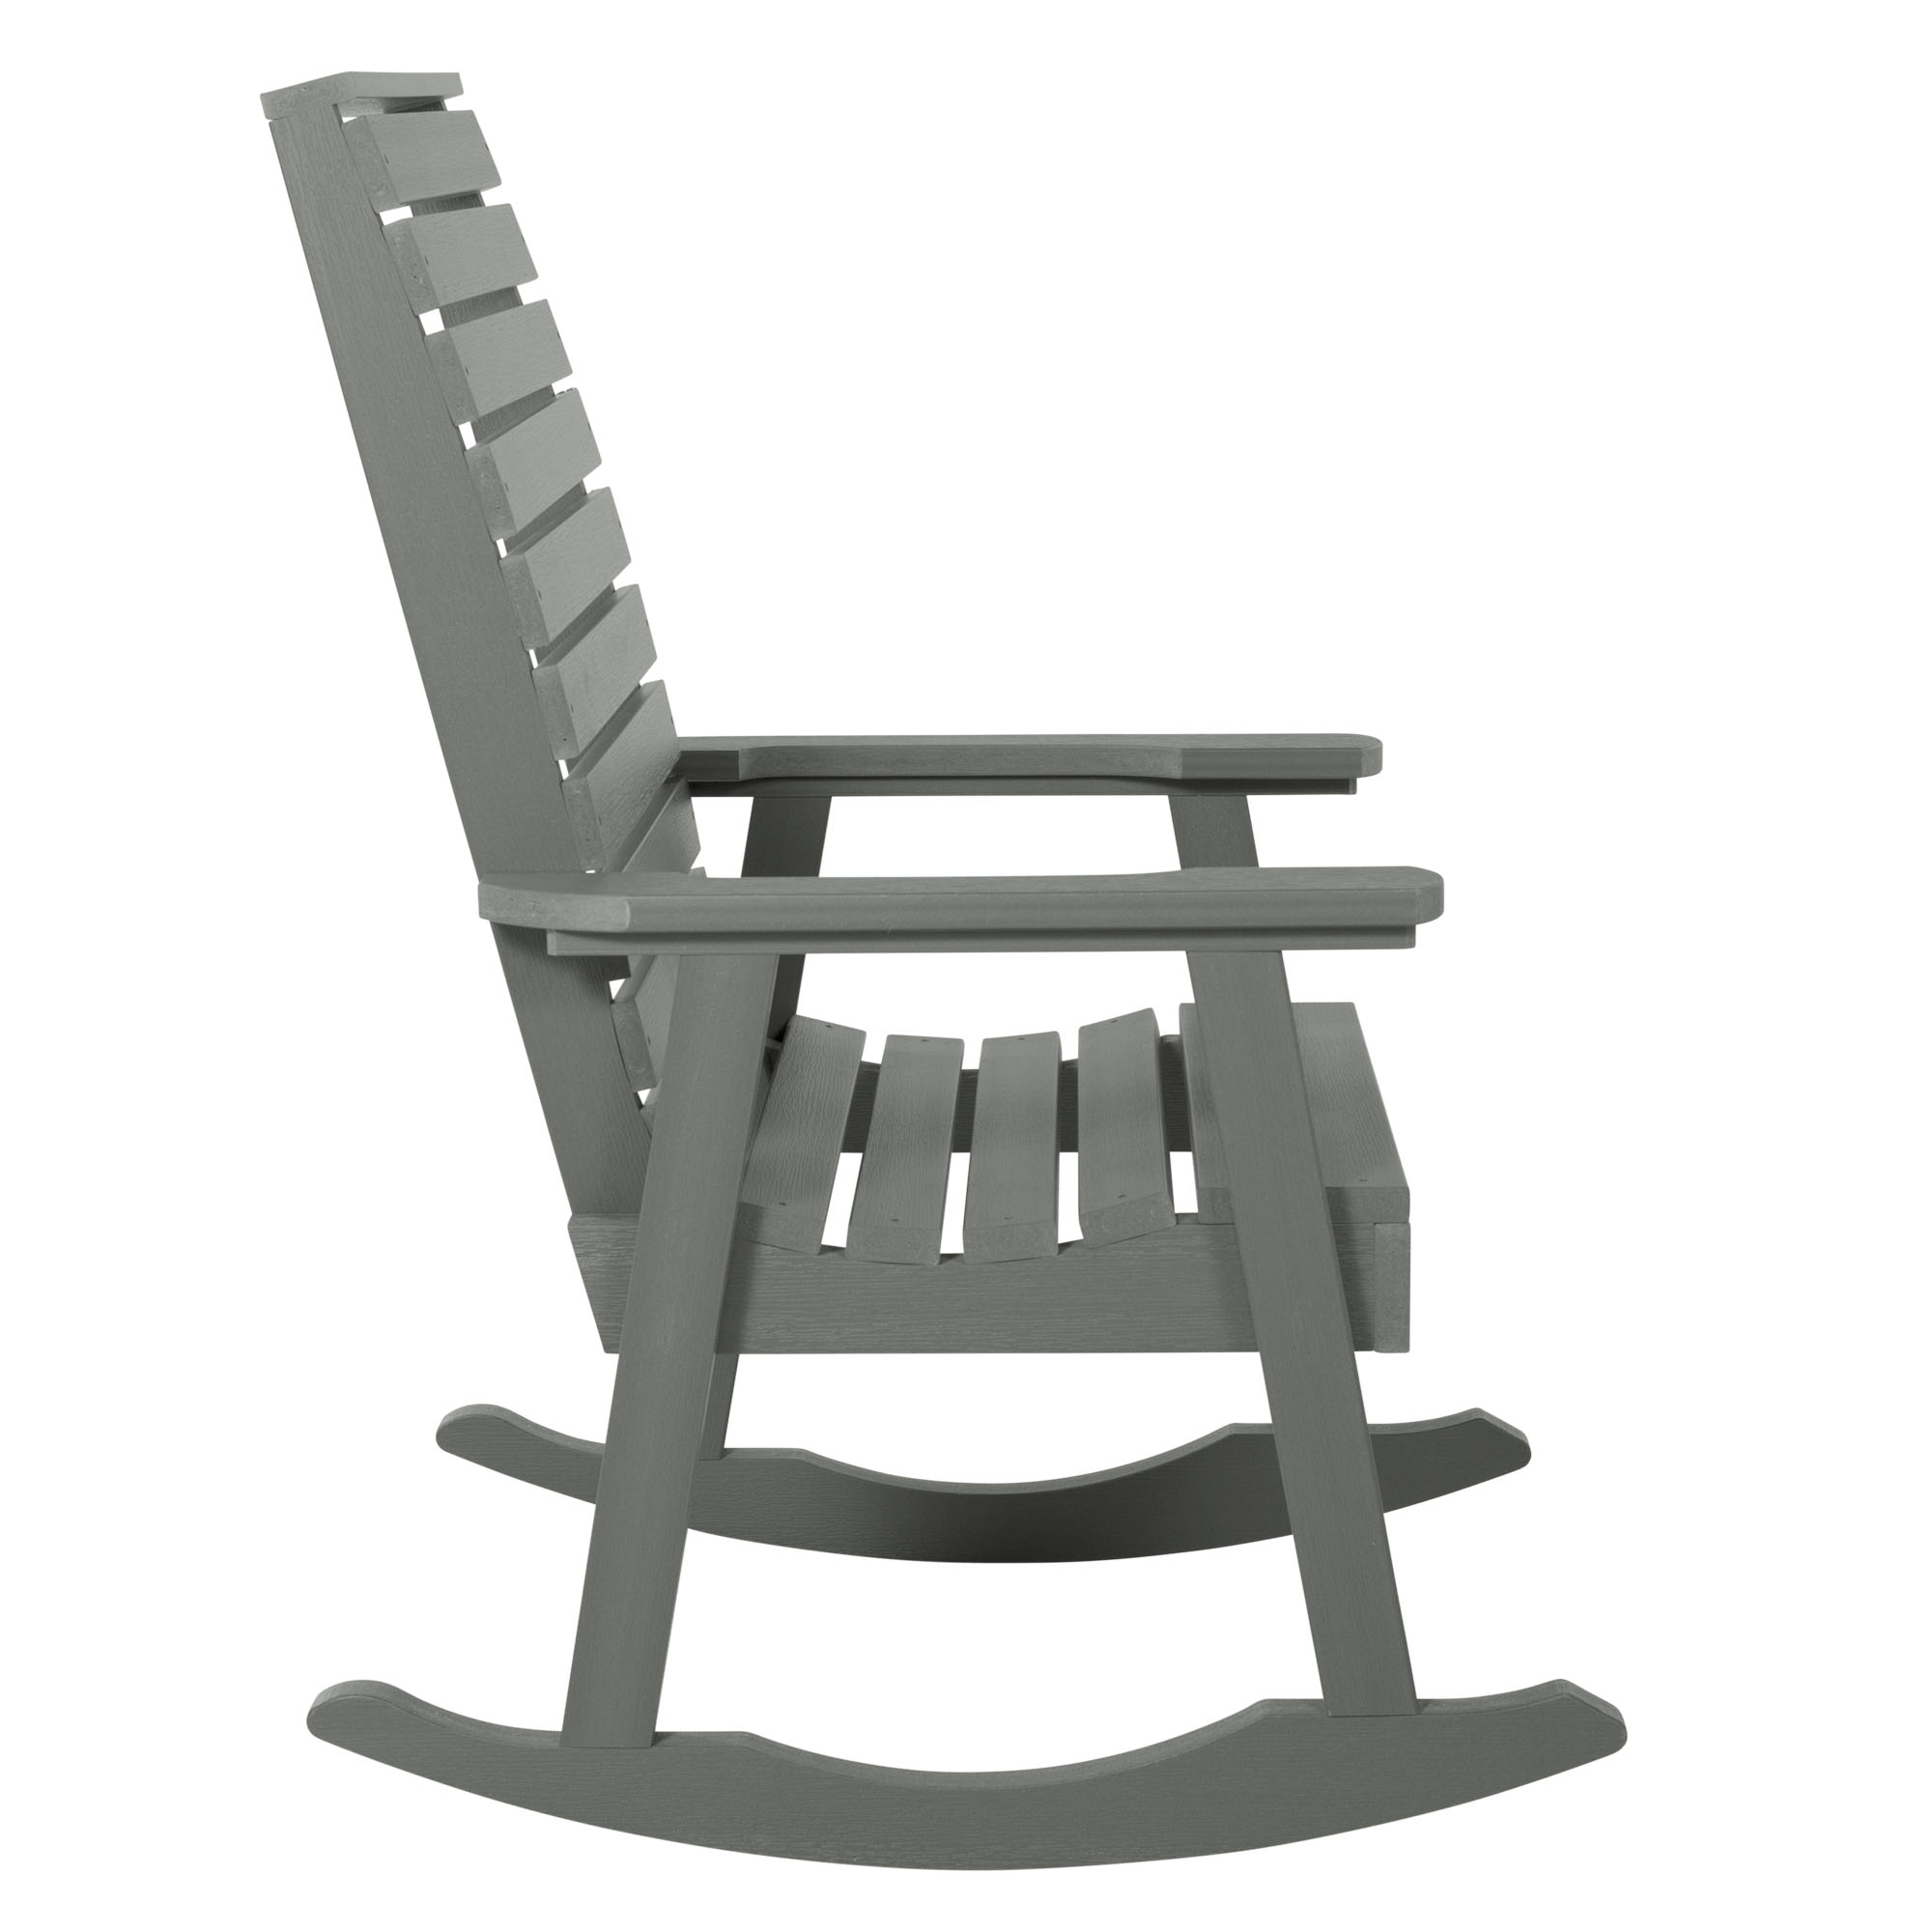 Highwood Weatherly Rocking Chair - image 3 of 5